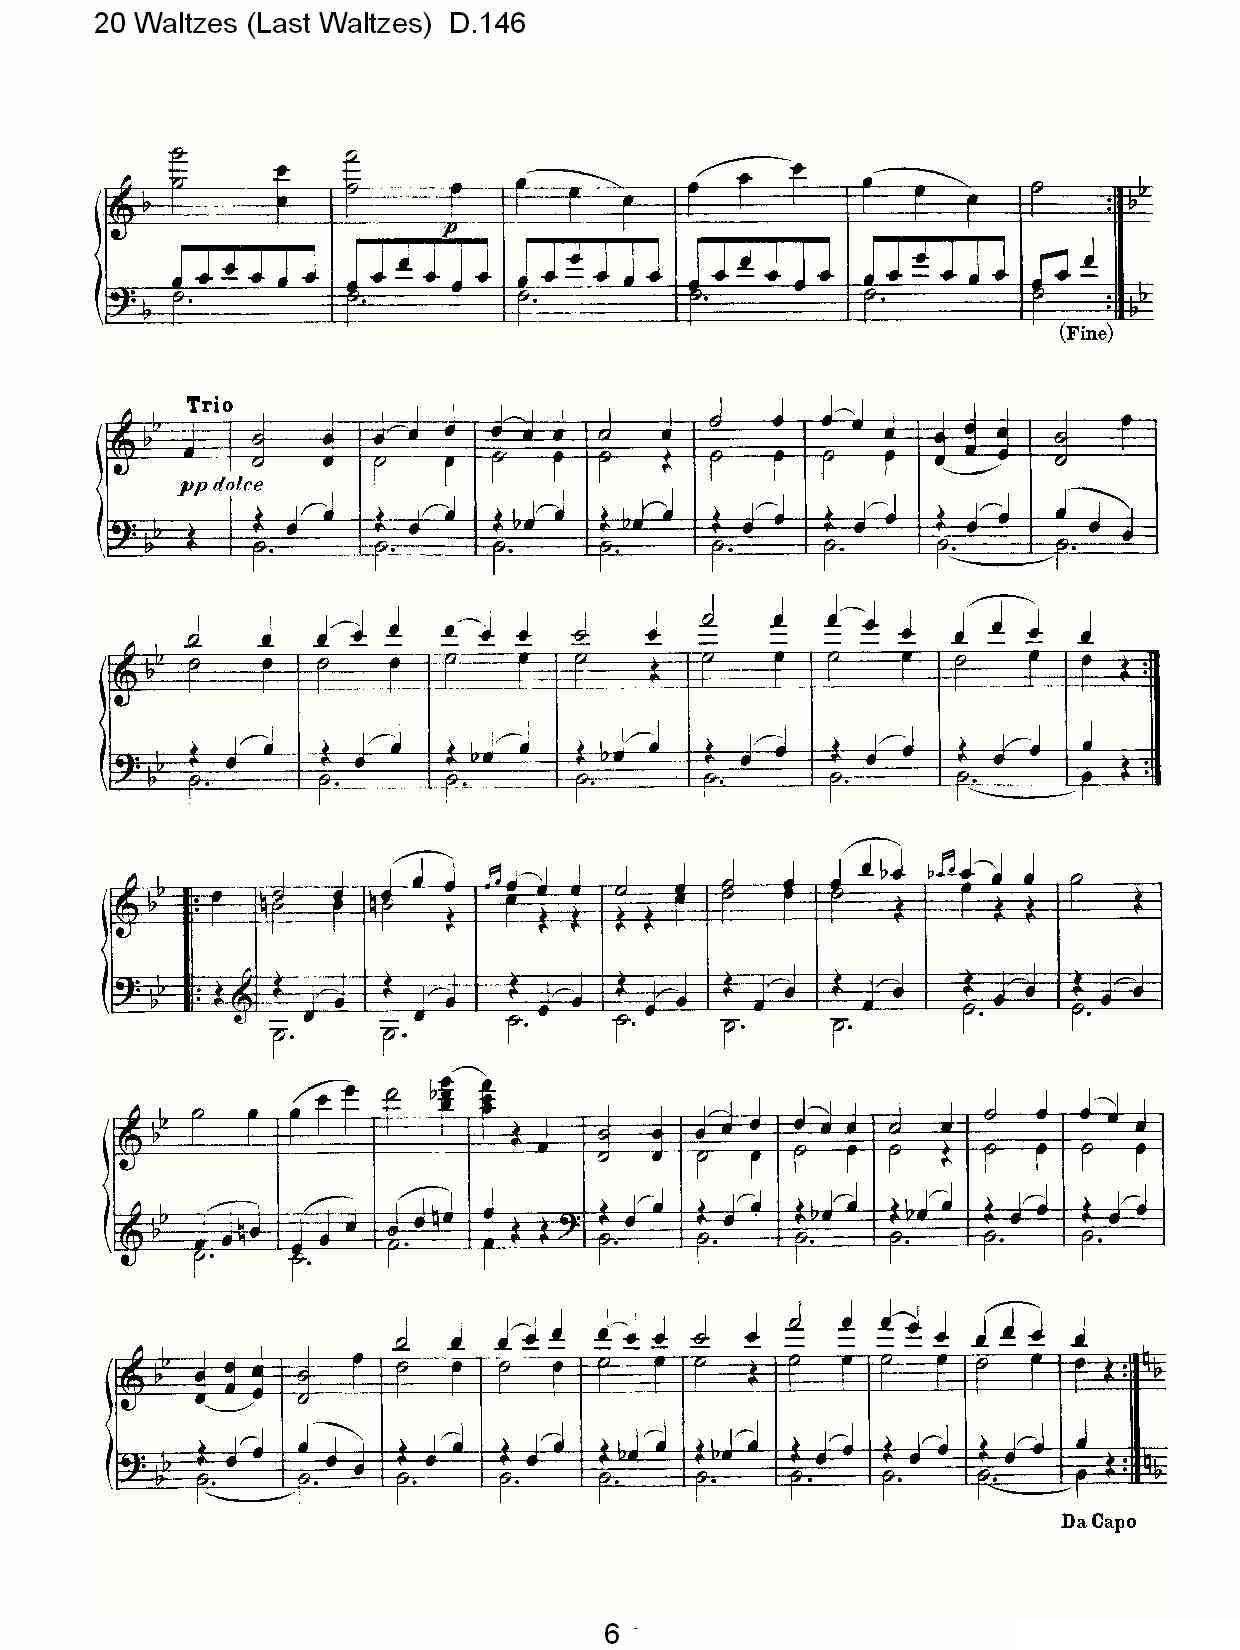 20 Waltzes（Last Waltzes) D.14）钢琴曲谱（图6）